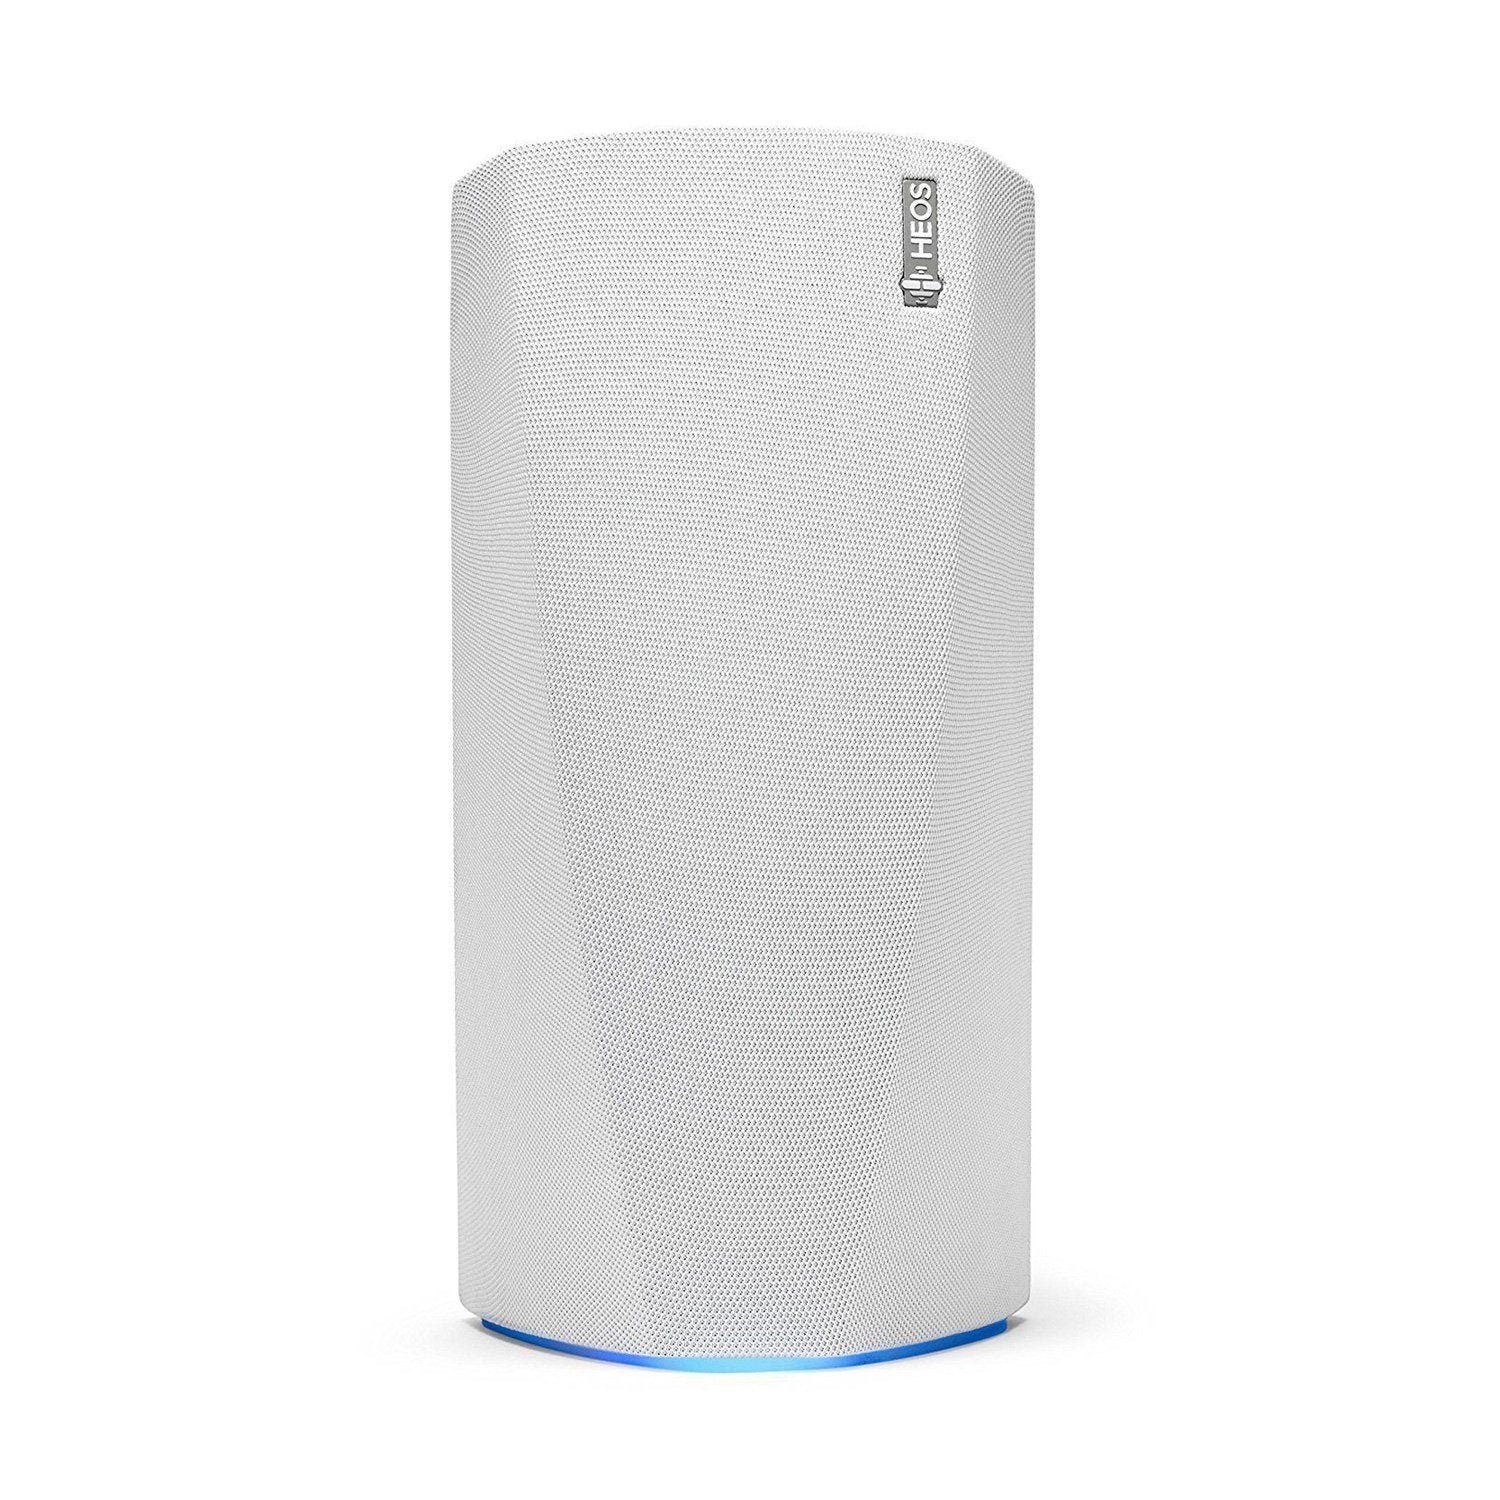 Denon HEOS 3 Wireless Speaker, Works with Alexa